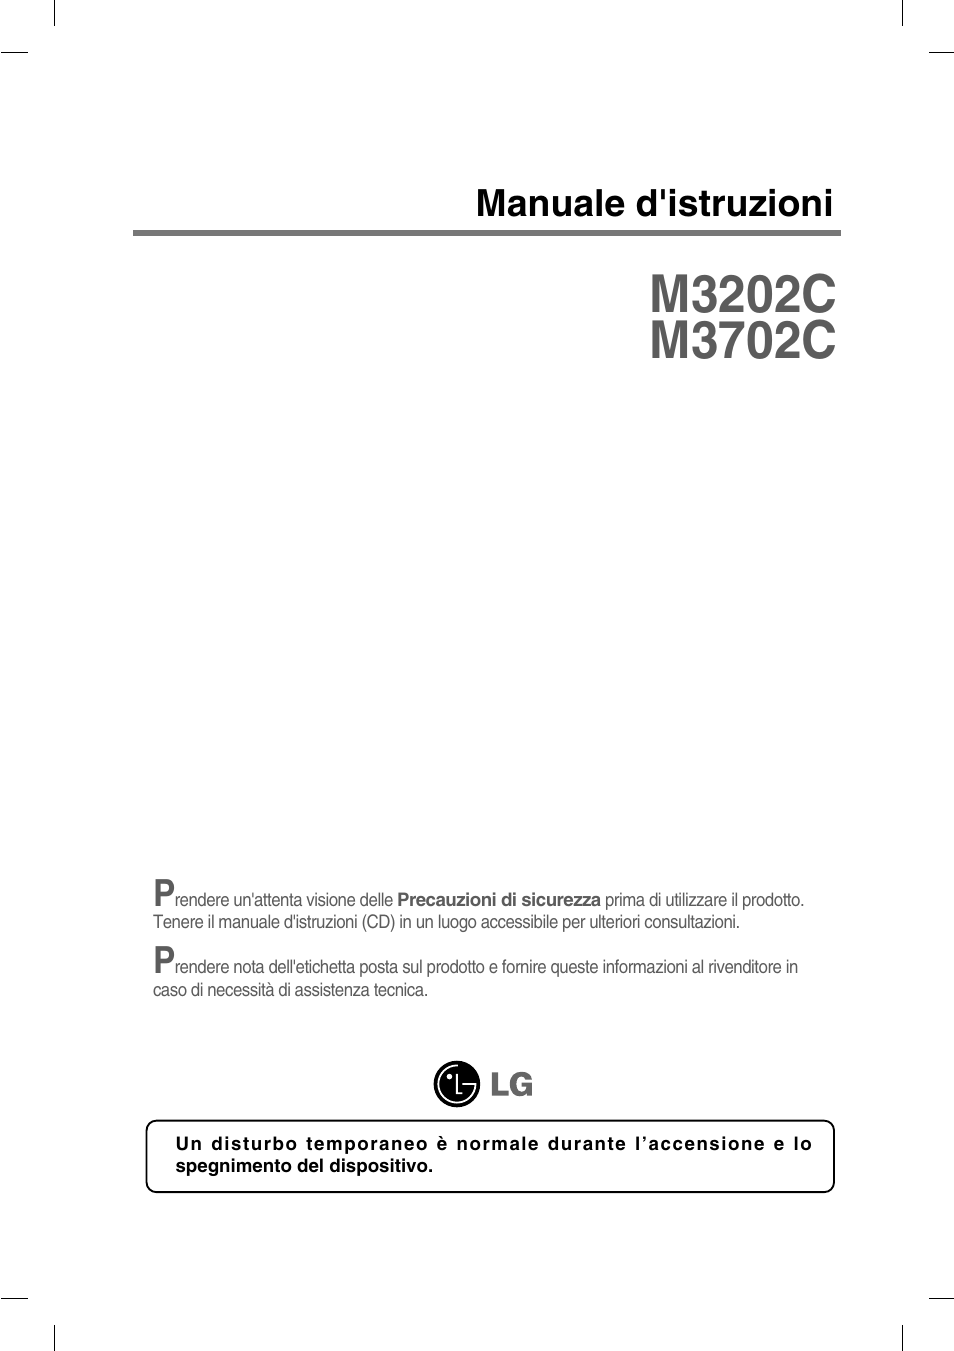 LG M3702C-BA Manuale d'uso | Pagine: 67